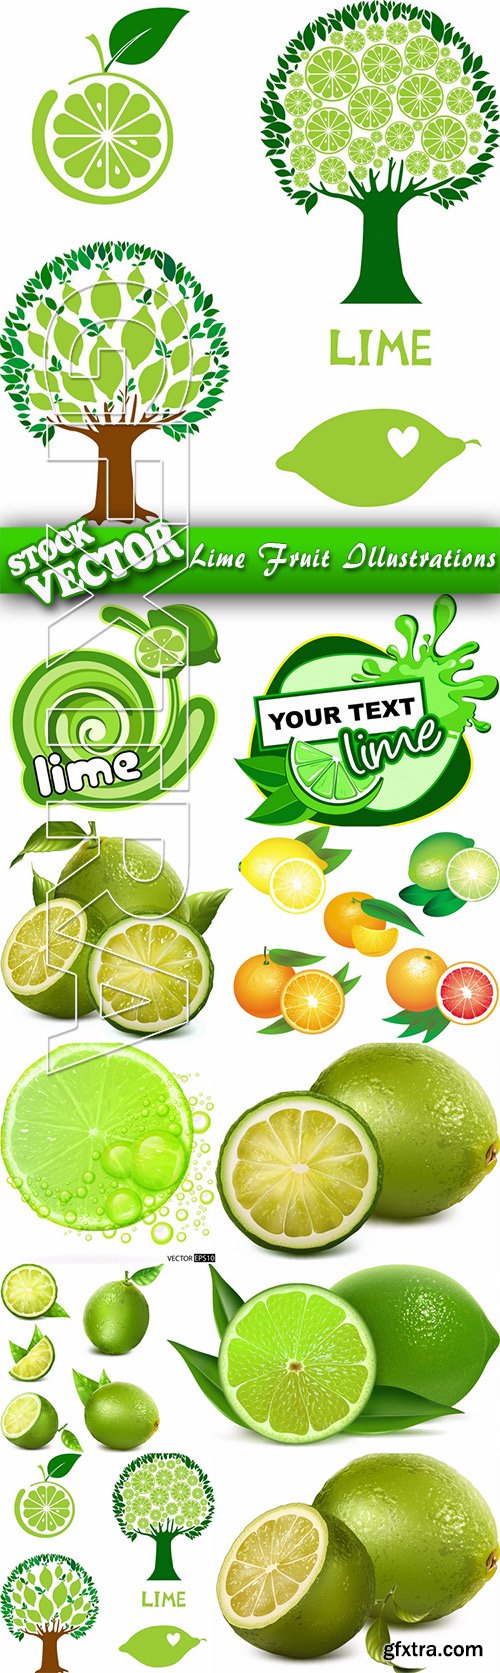 Stock Vector - Lime Fruit Illustrations